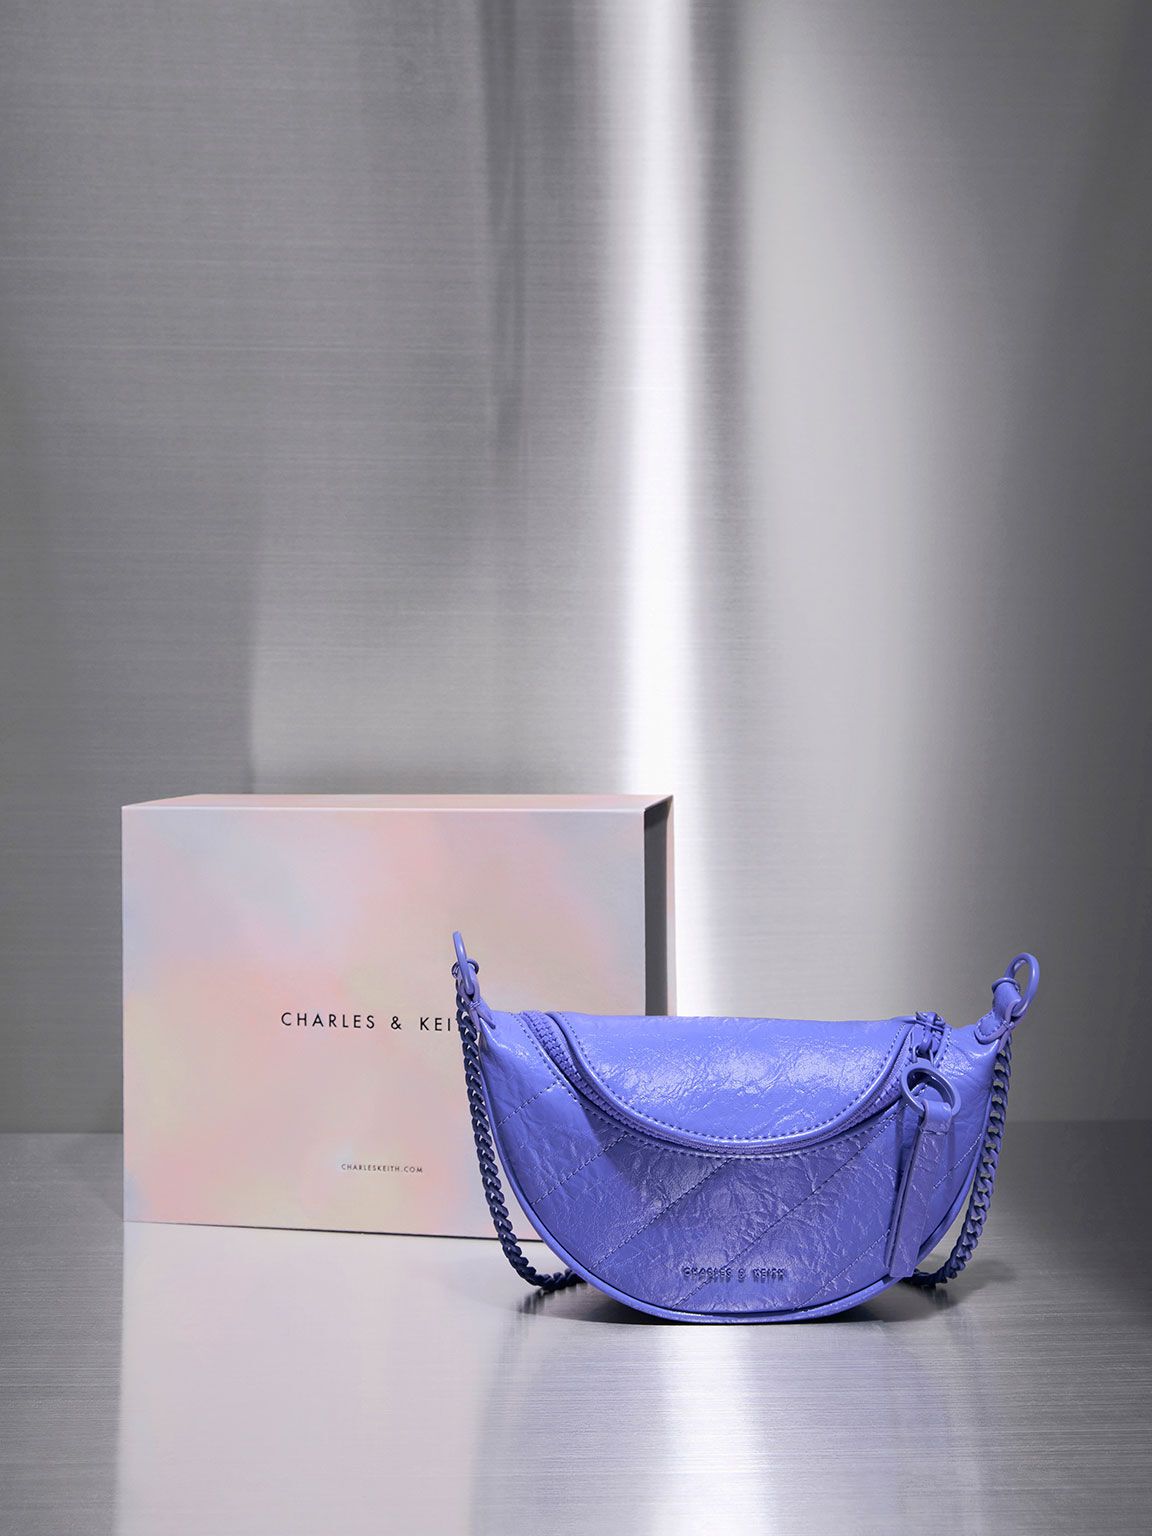 Philomena Half-Moon Crossbody Bag, Purple, hi-res